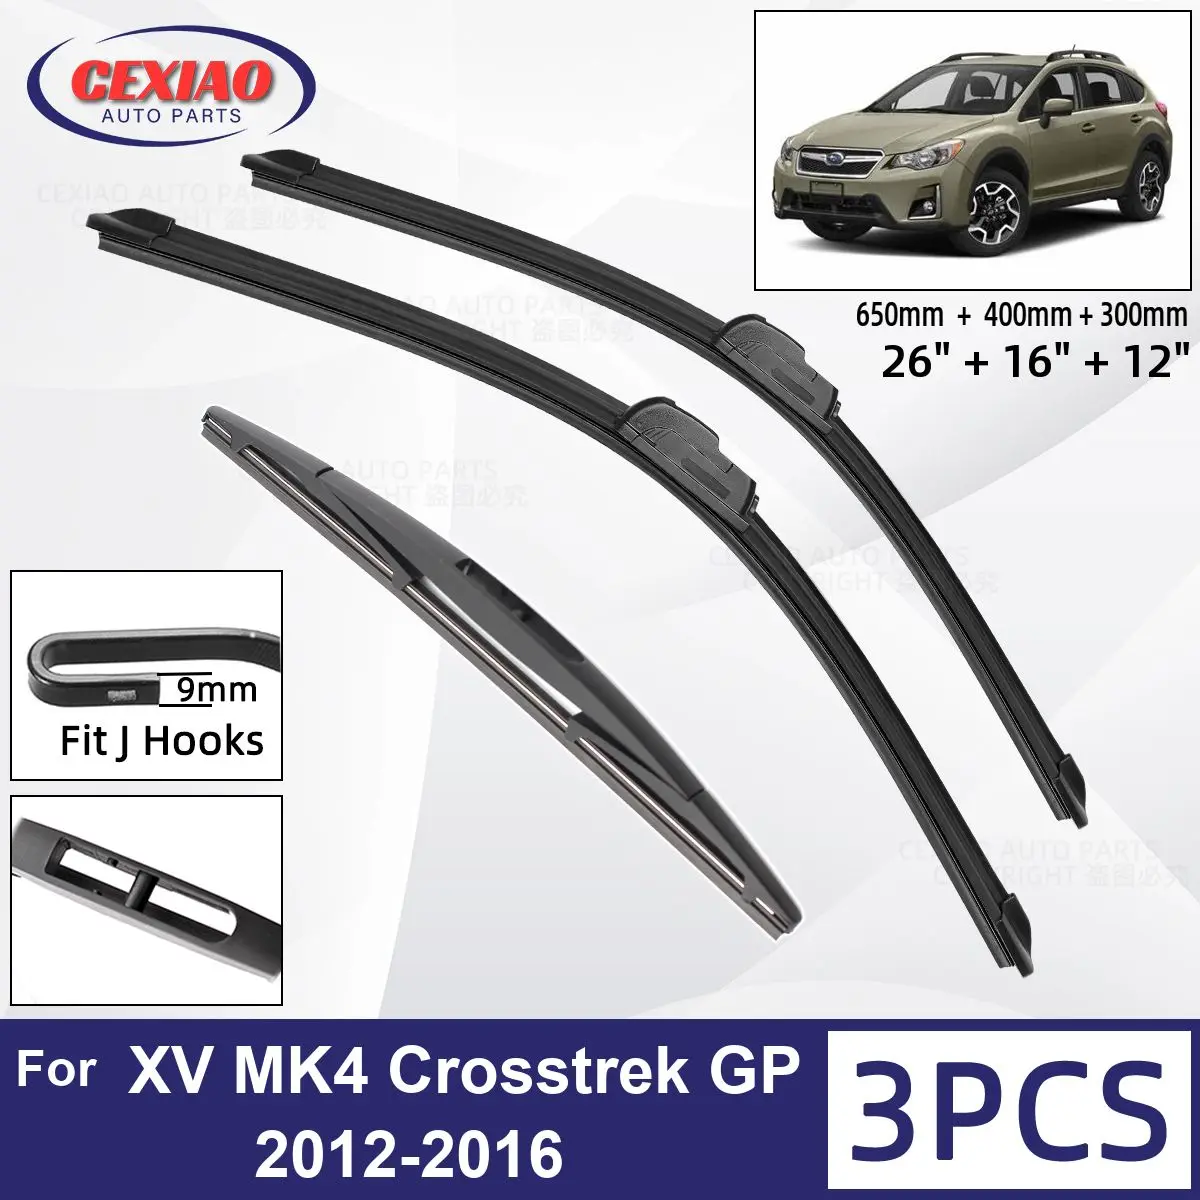 

For Subaru XV MK4 Crosstrek GP 2012 - 2016 Car Front Rear Wiper Blades Soft Rubber Windscreen Wipers Auto Windshield 26"+16"+12"